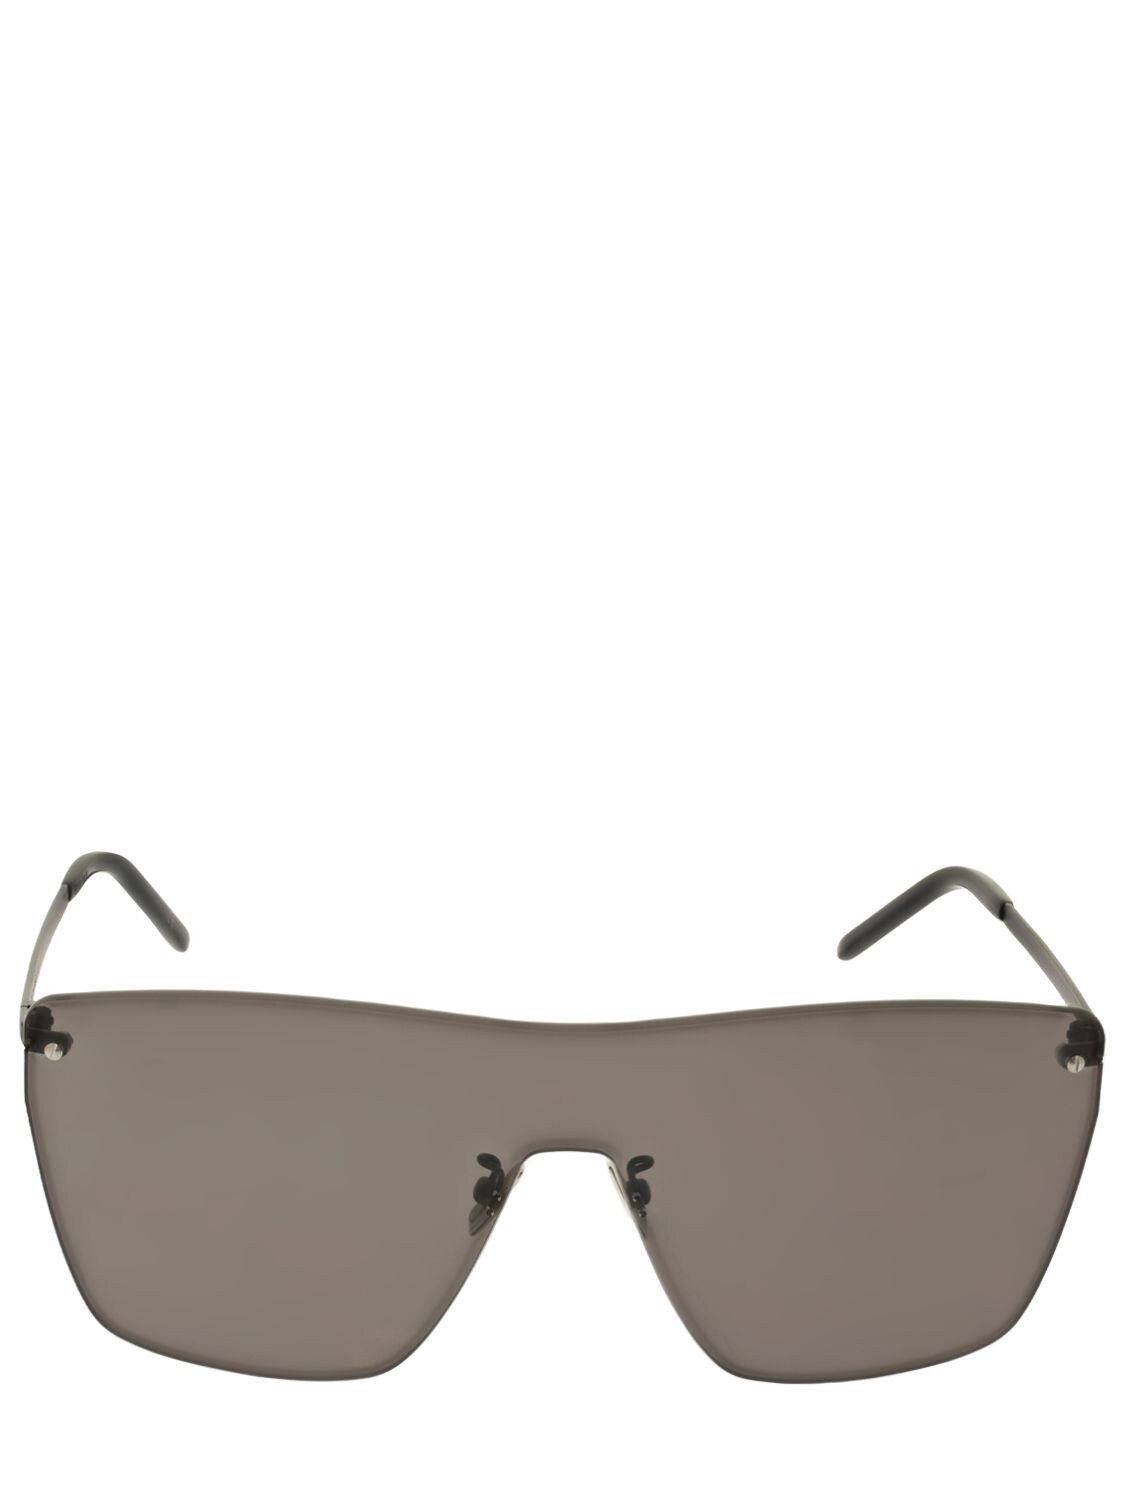 Ysl Sl 463 Mask Metal Sunglasses